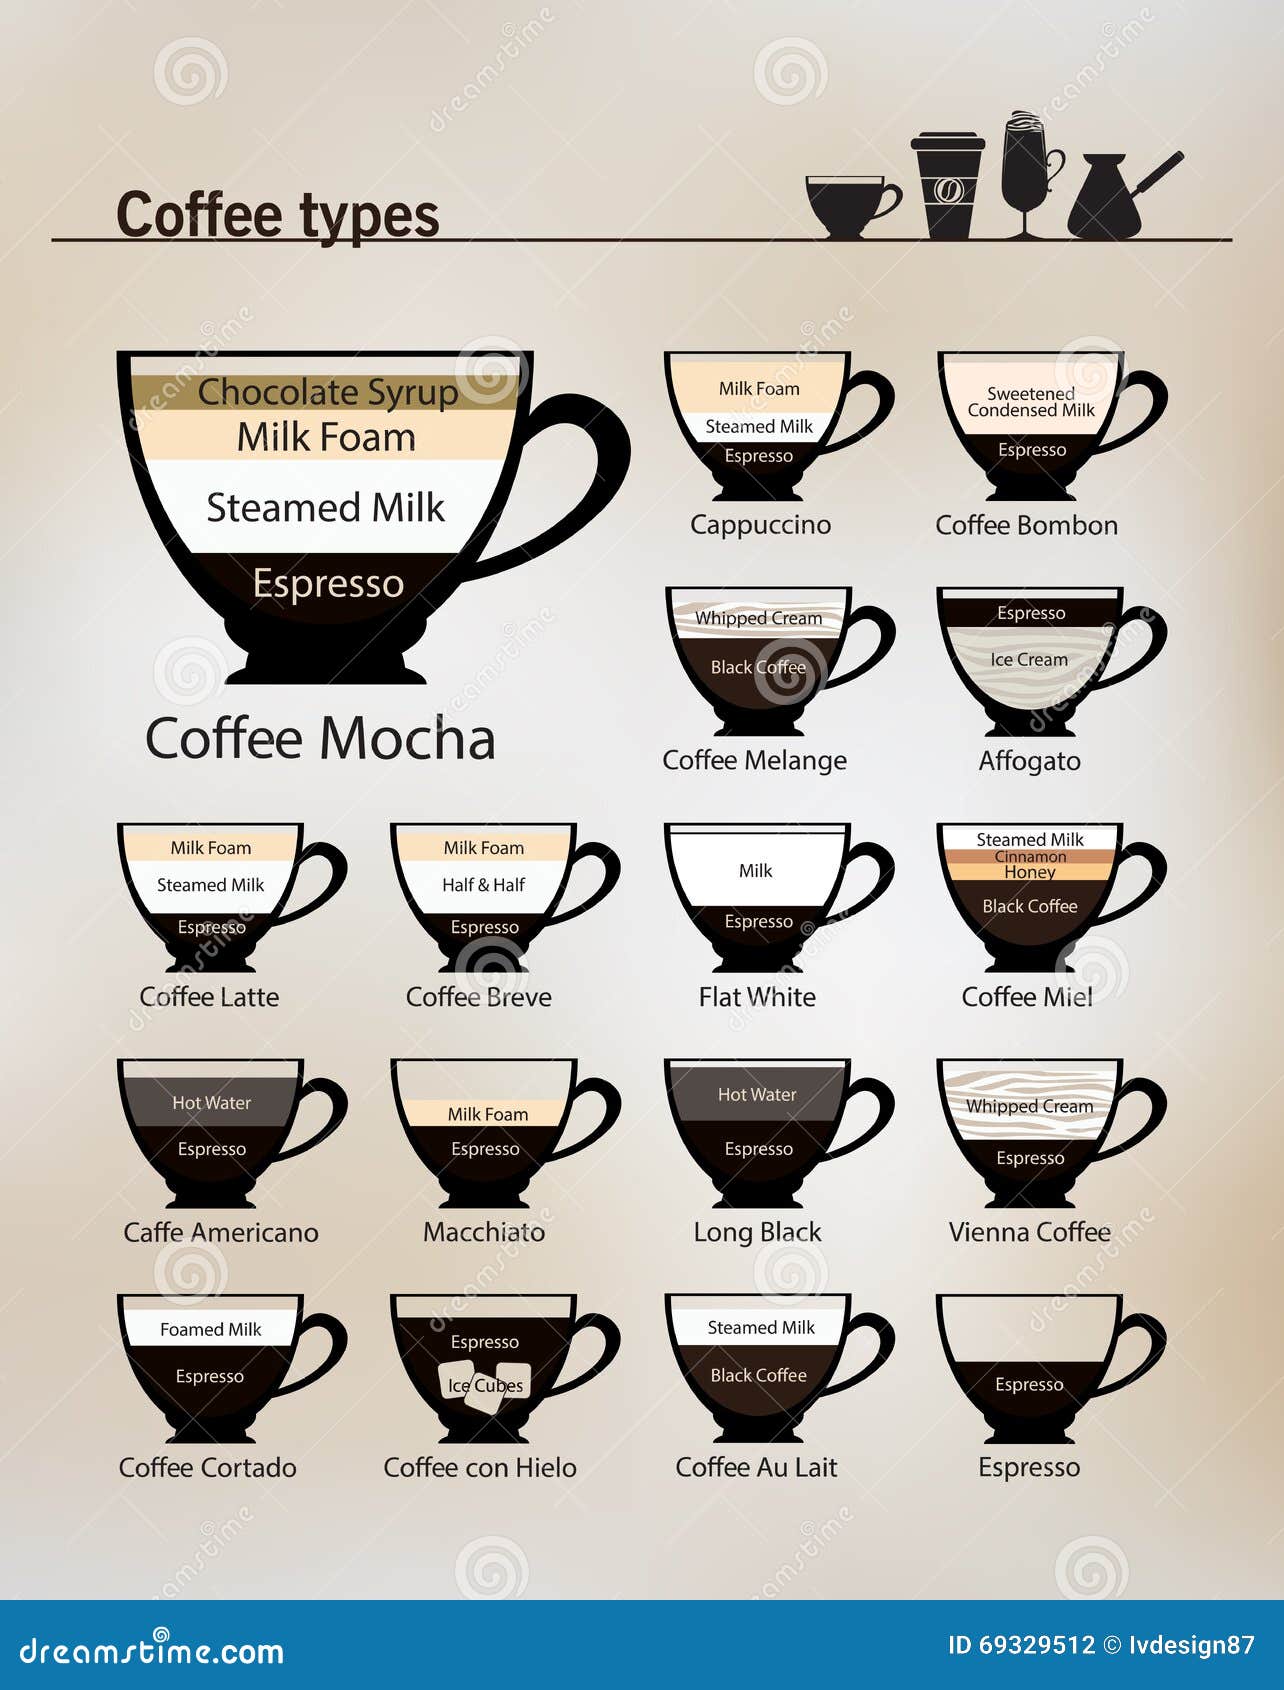 Cafe Noisette Coffee Recipes Stock Illustration - Illustration of coffee,  espresso: 178025895